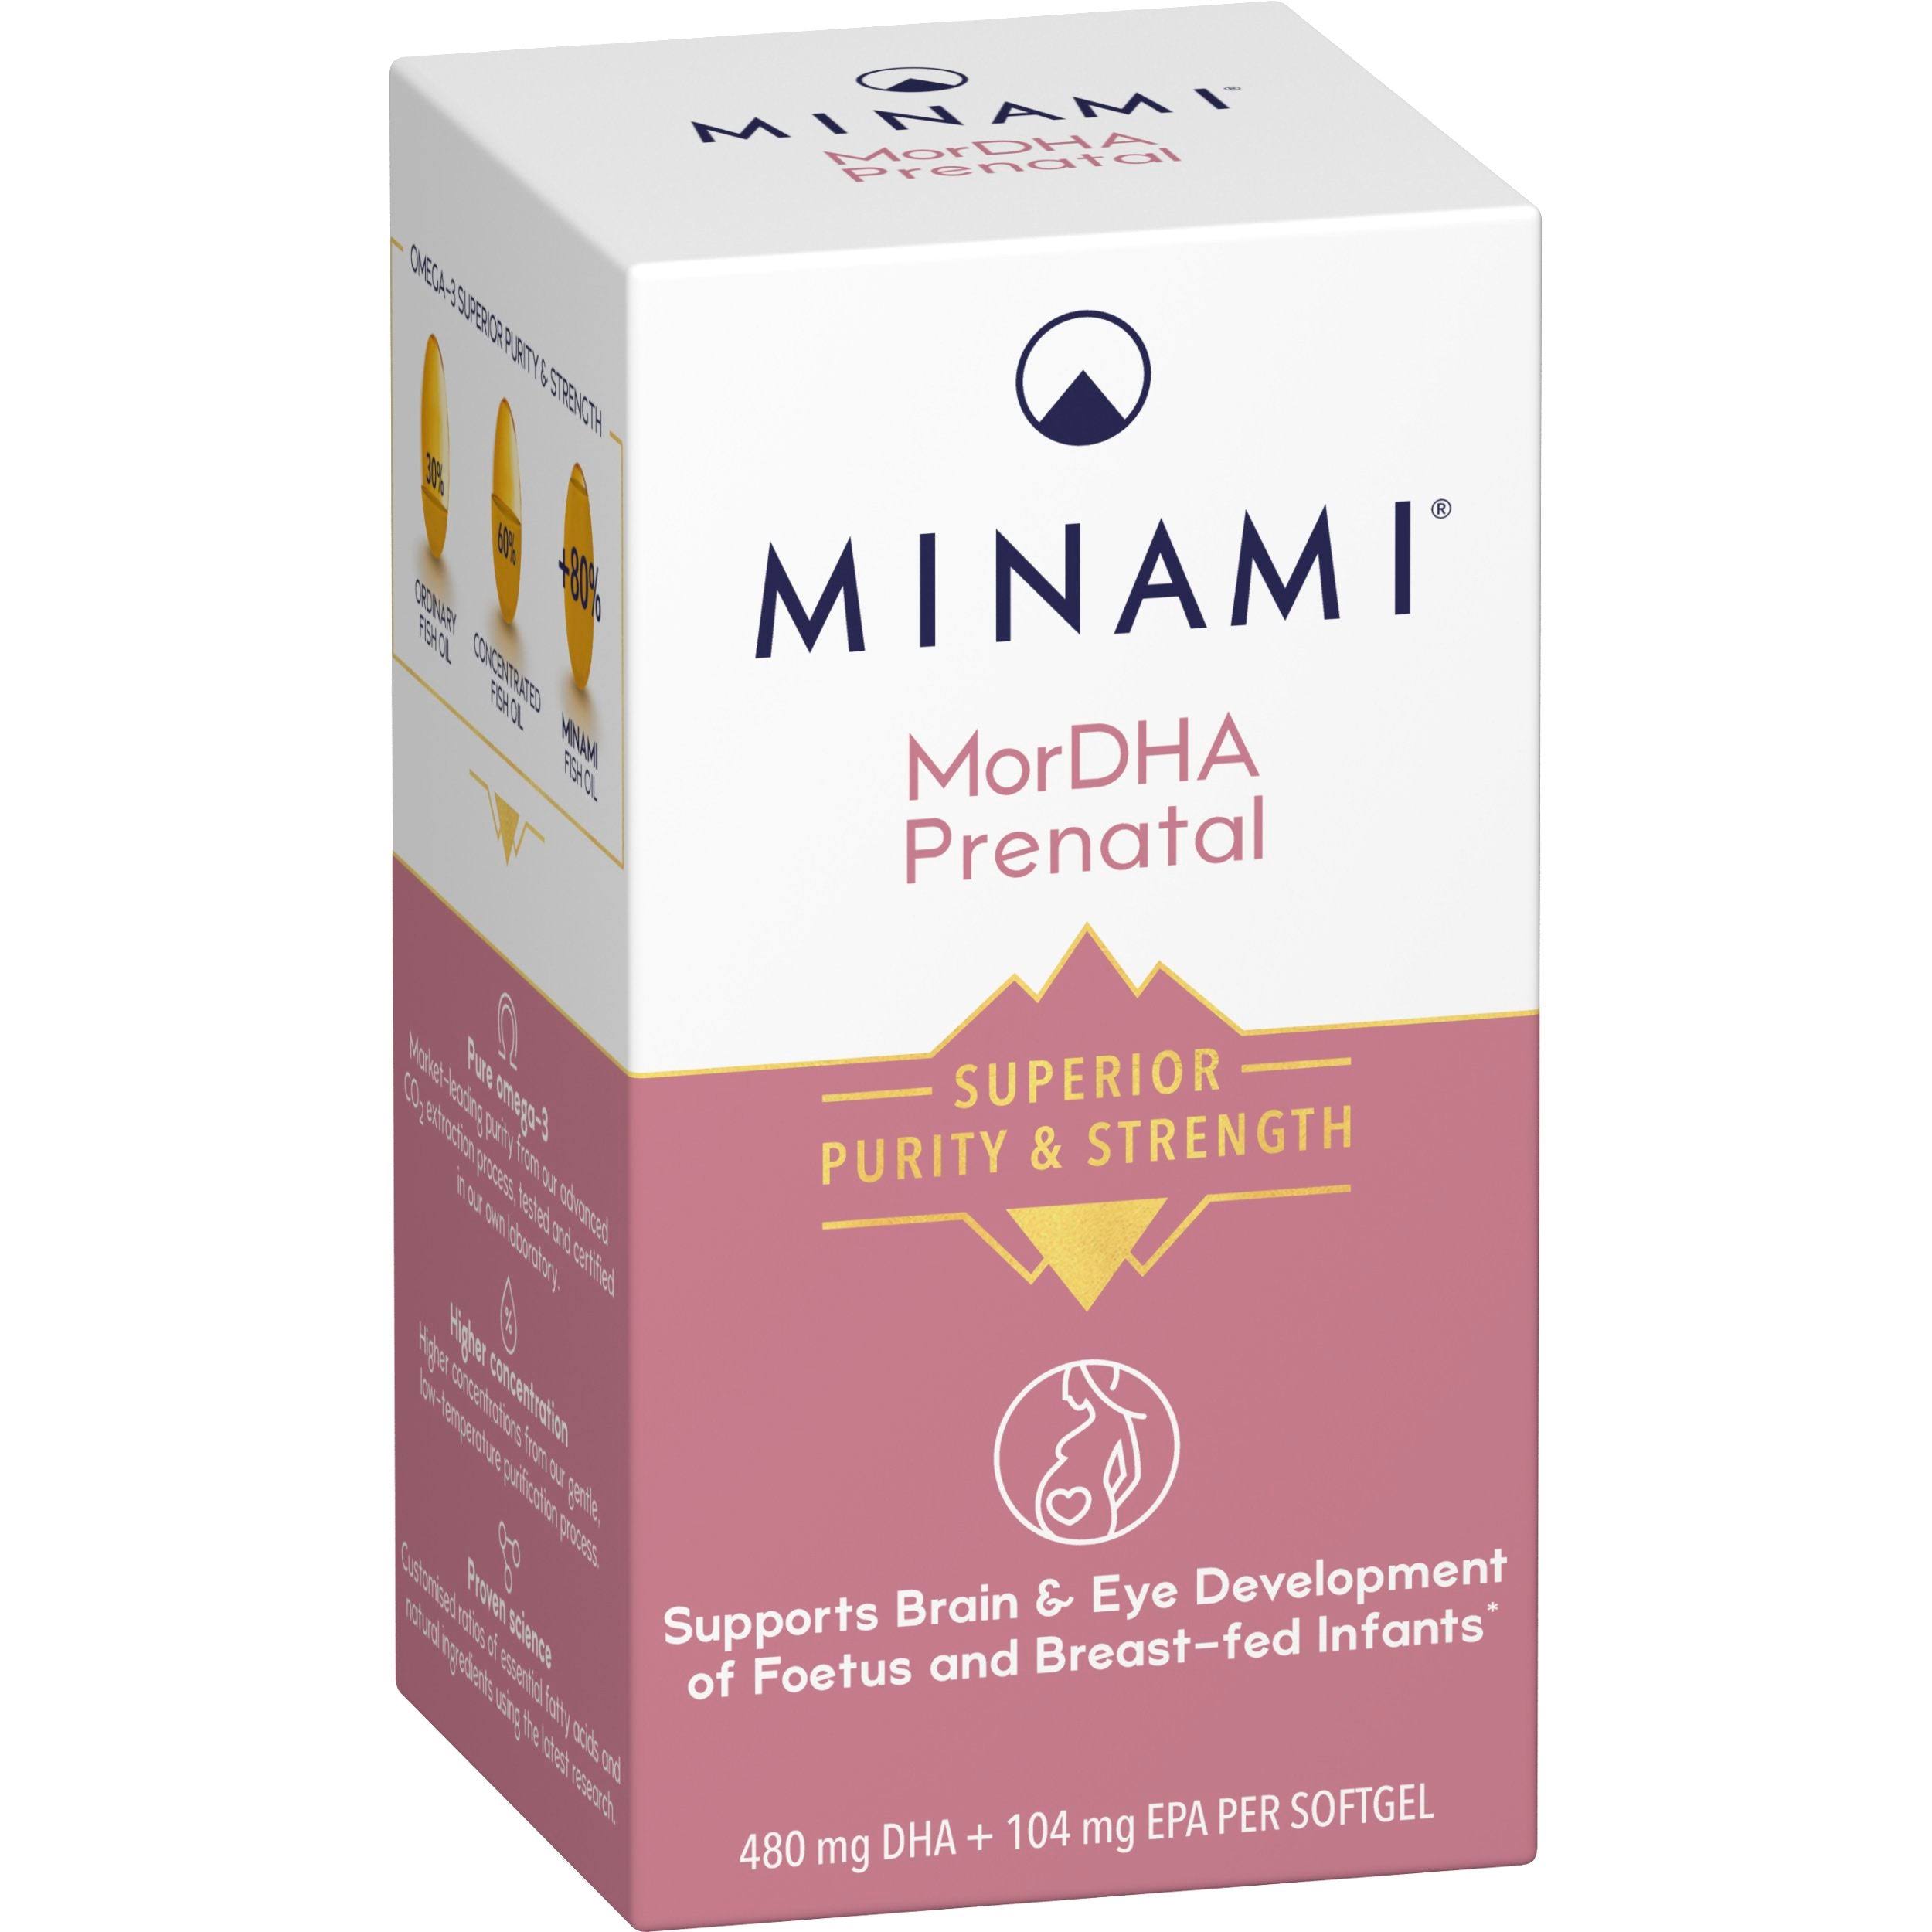 Minami MorDHA Prenatal 80% Omega 3 High DHA Formula Softgel Supplement - Lemon Flavour, 60ct